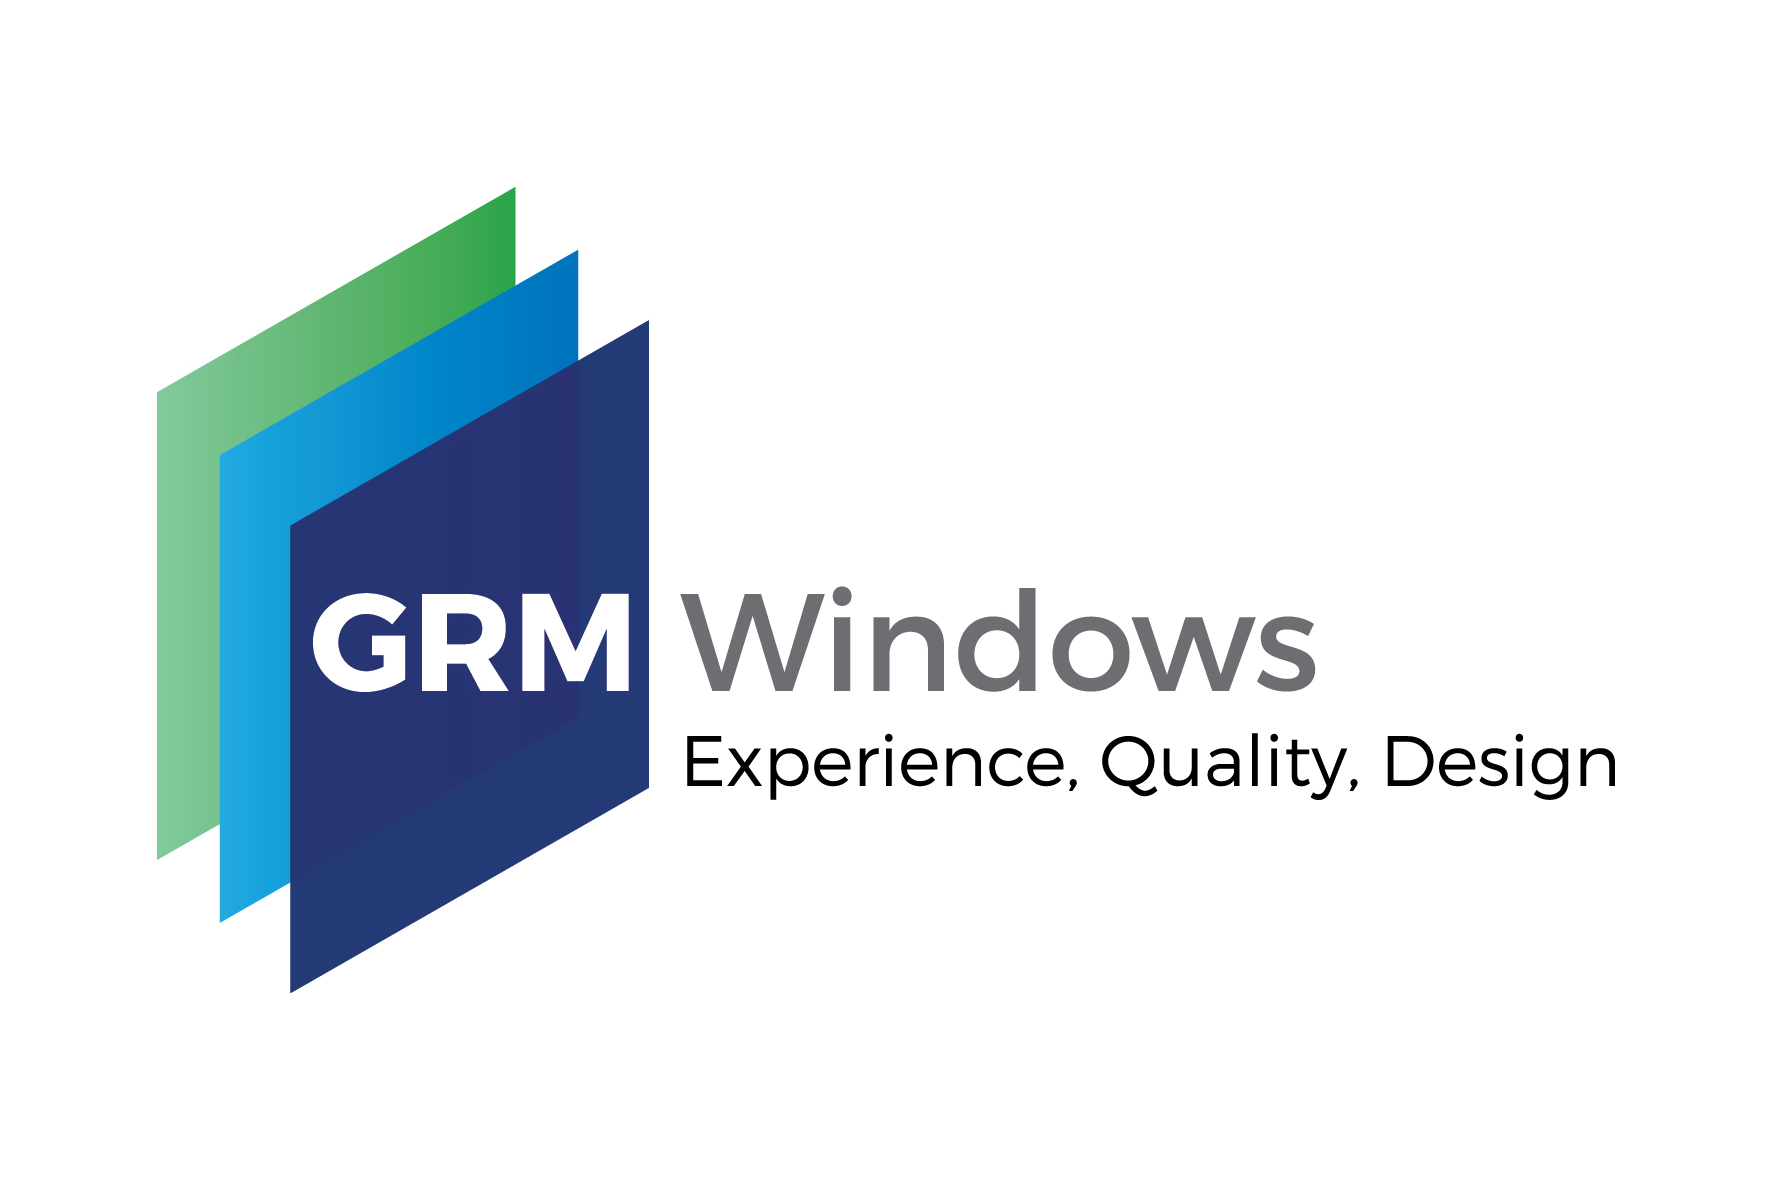 GRM Windows